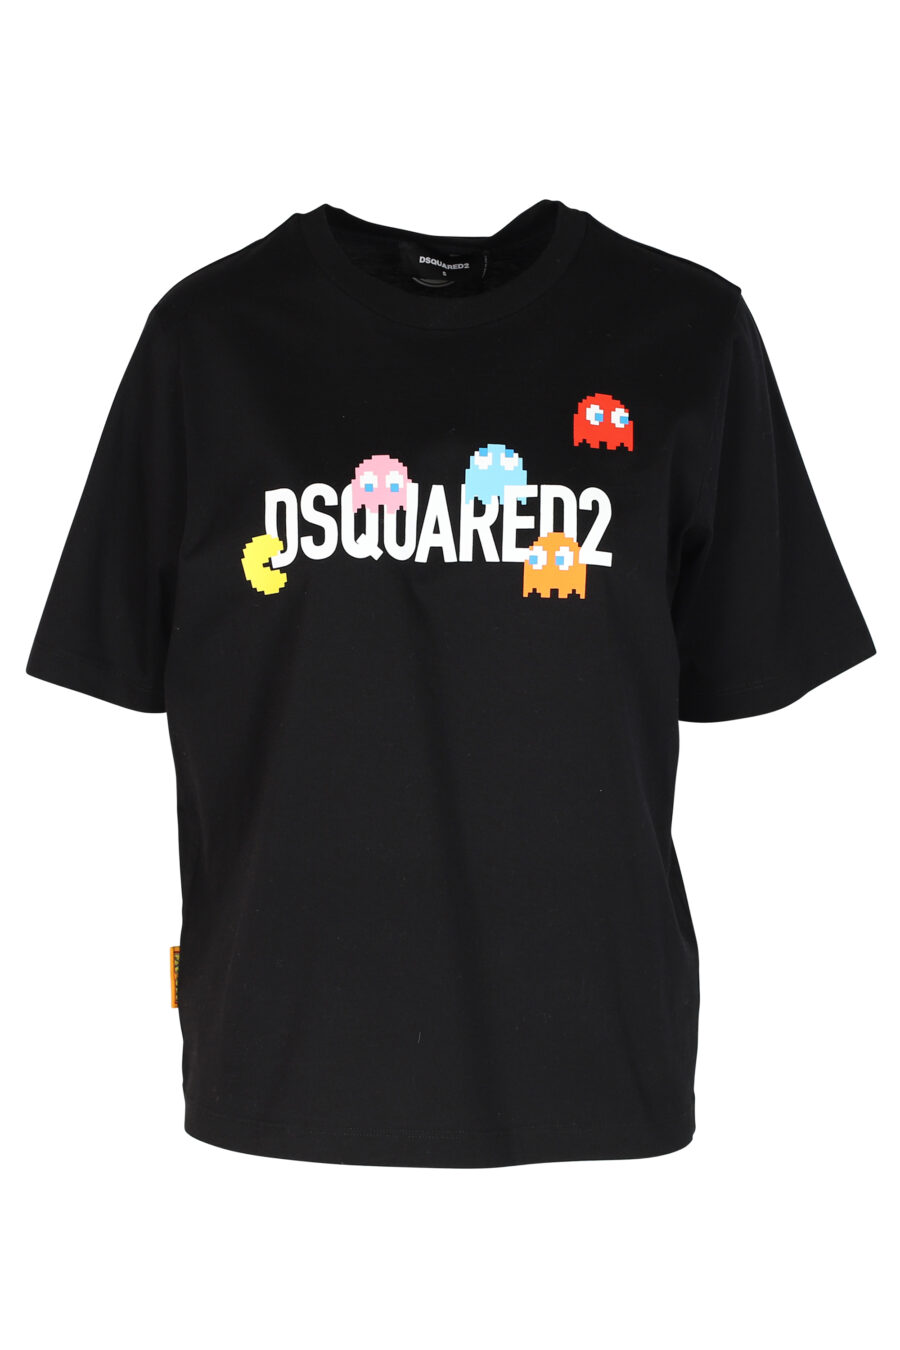 Camiseta negra con logo "Pac-man" - 8054148185558